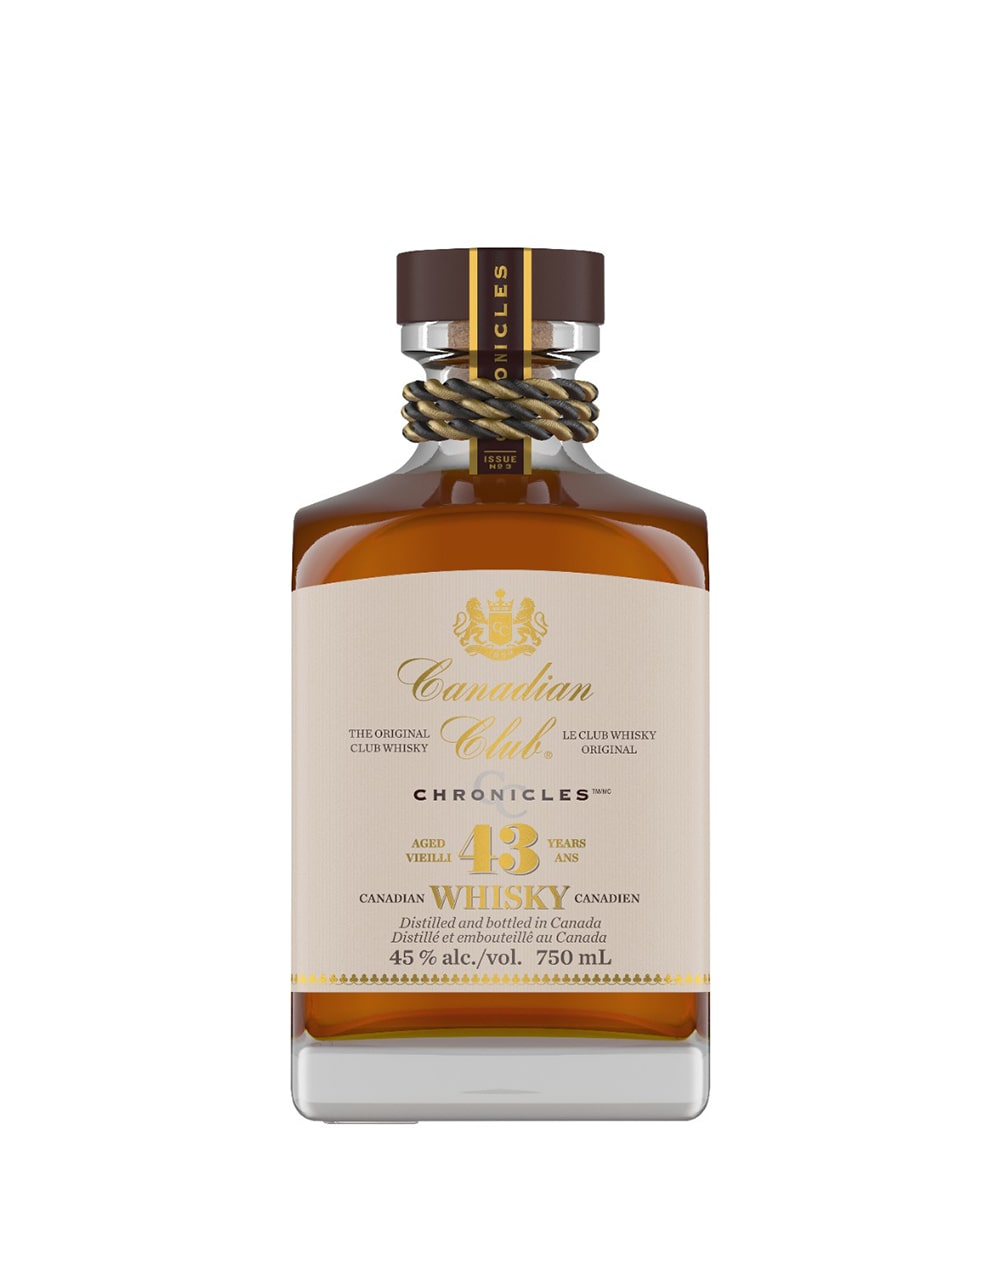 The Macallan No 6 Highland Single Malt Scotch Whisky